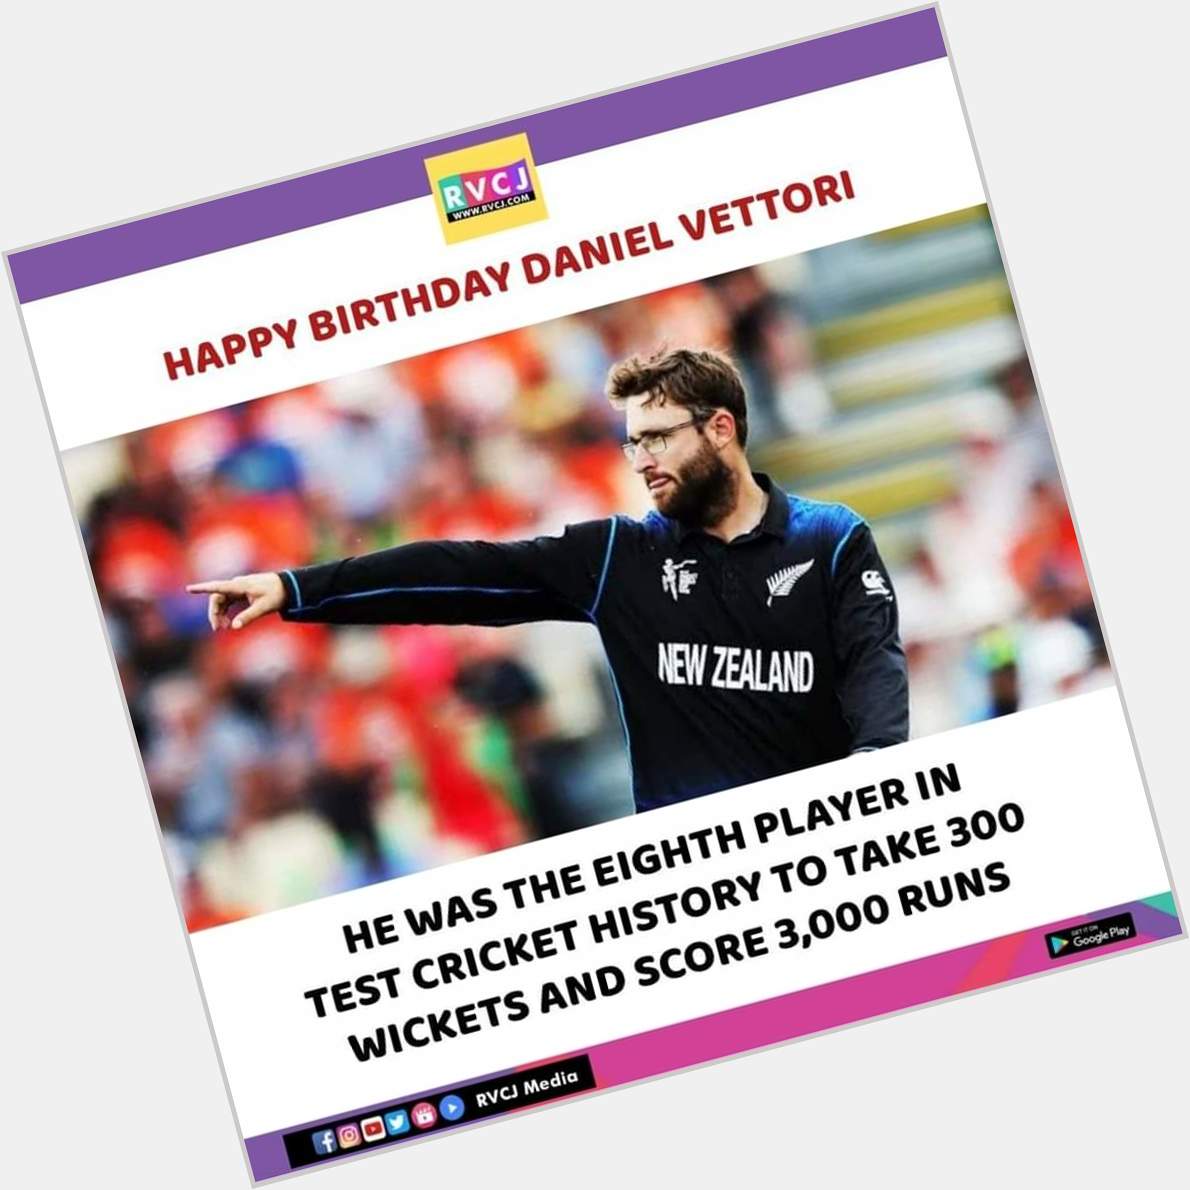 Happy Birthday Daniel Vettori!  